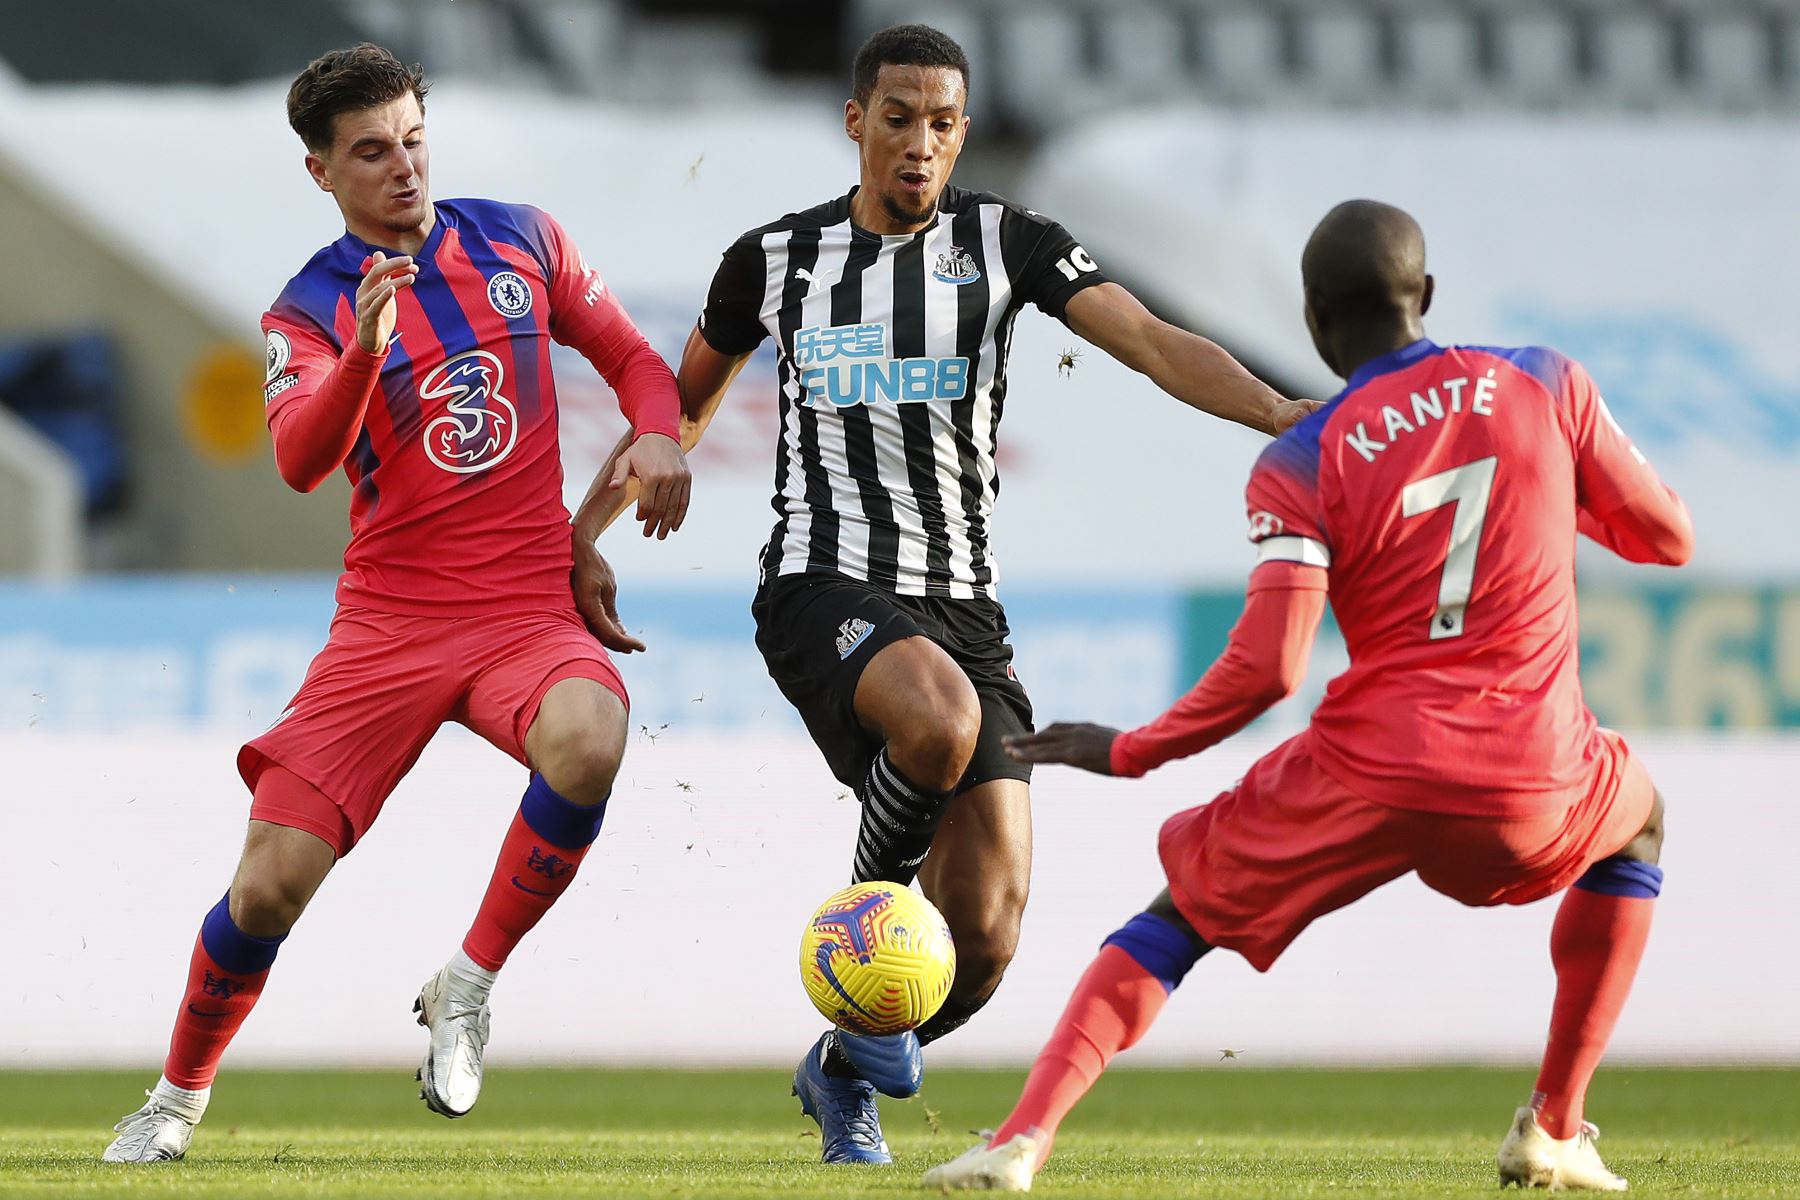 El centrocampista inglés del Newcastle United Isaac Hayden compite contra el centrocampista francés del Chelsea N